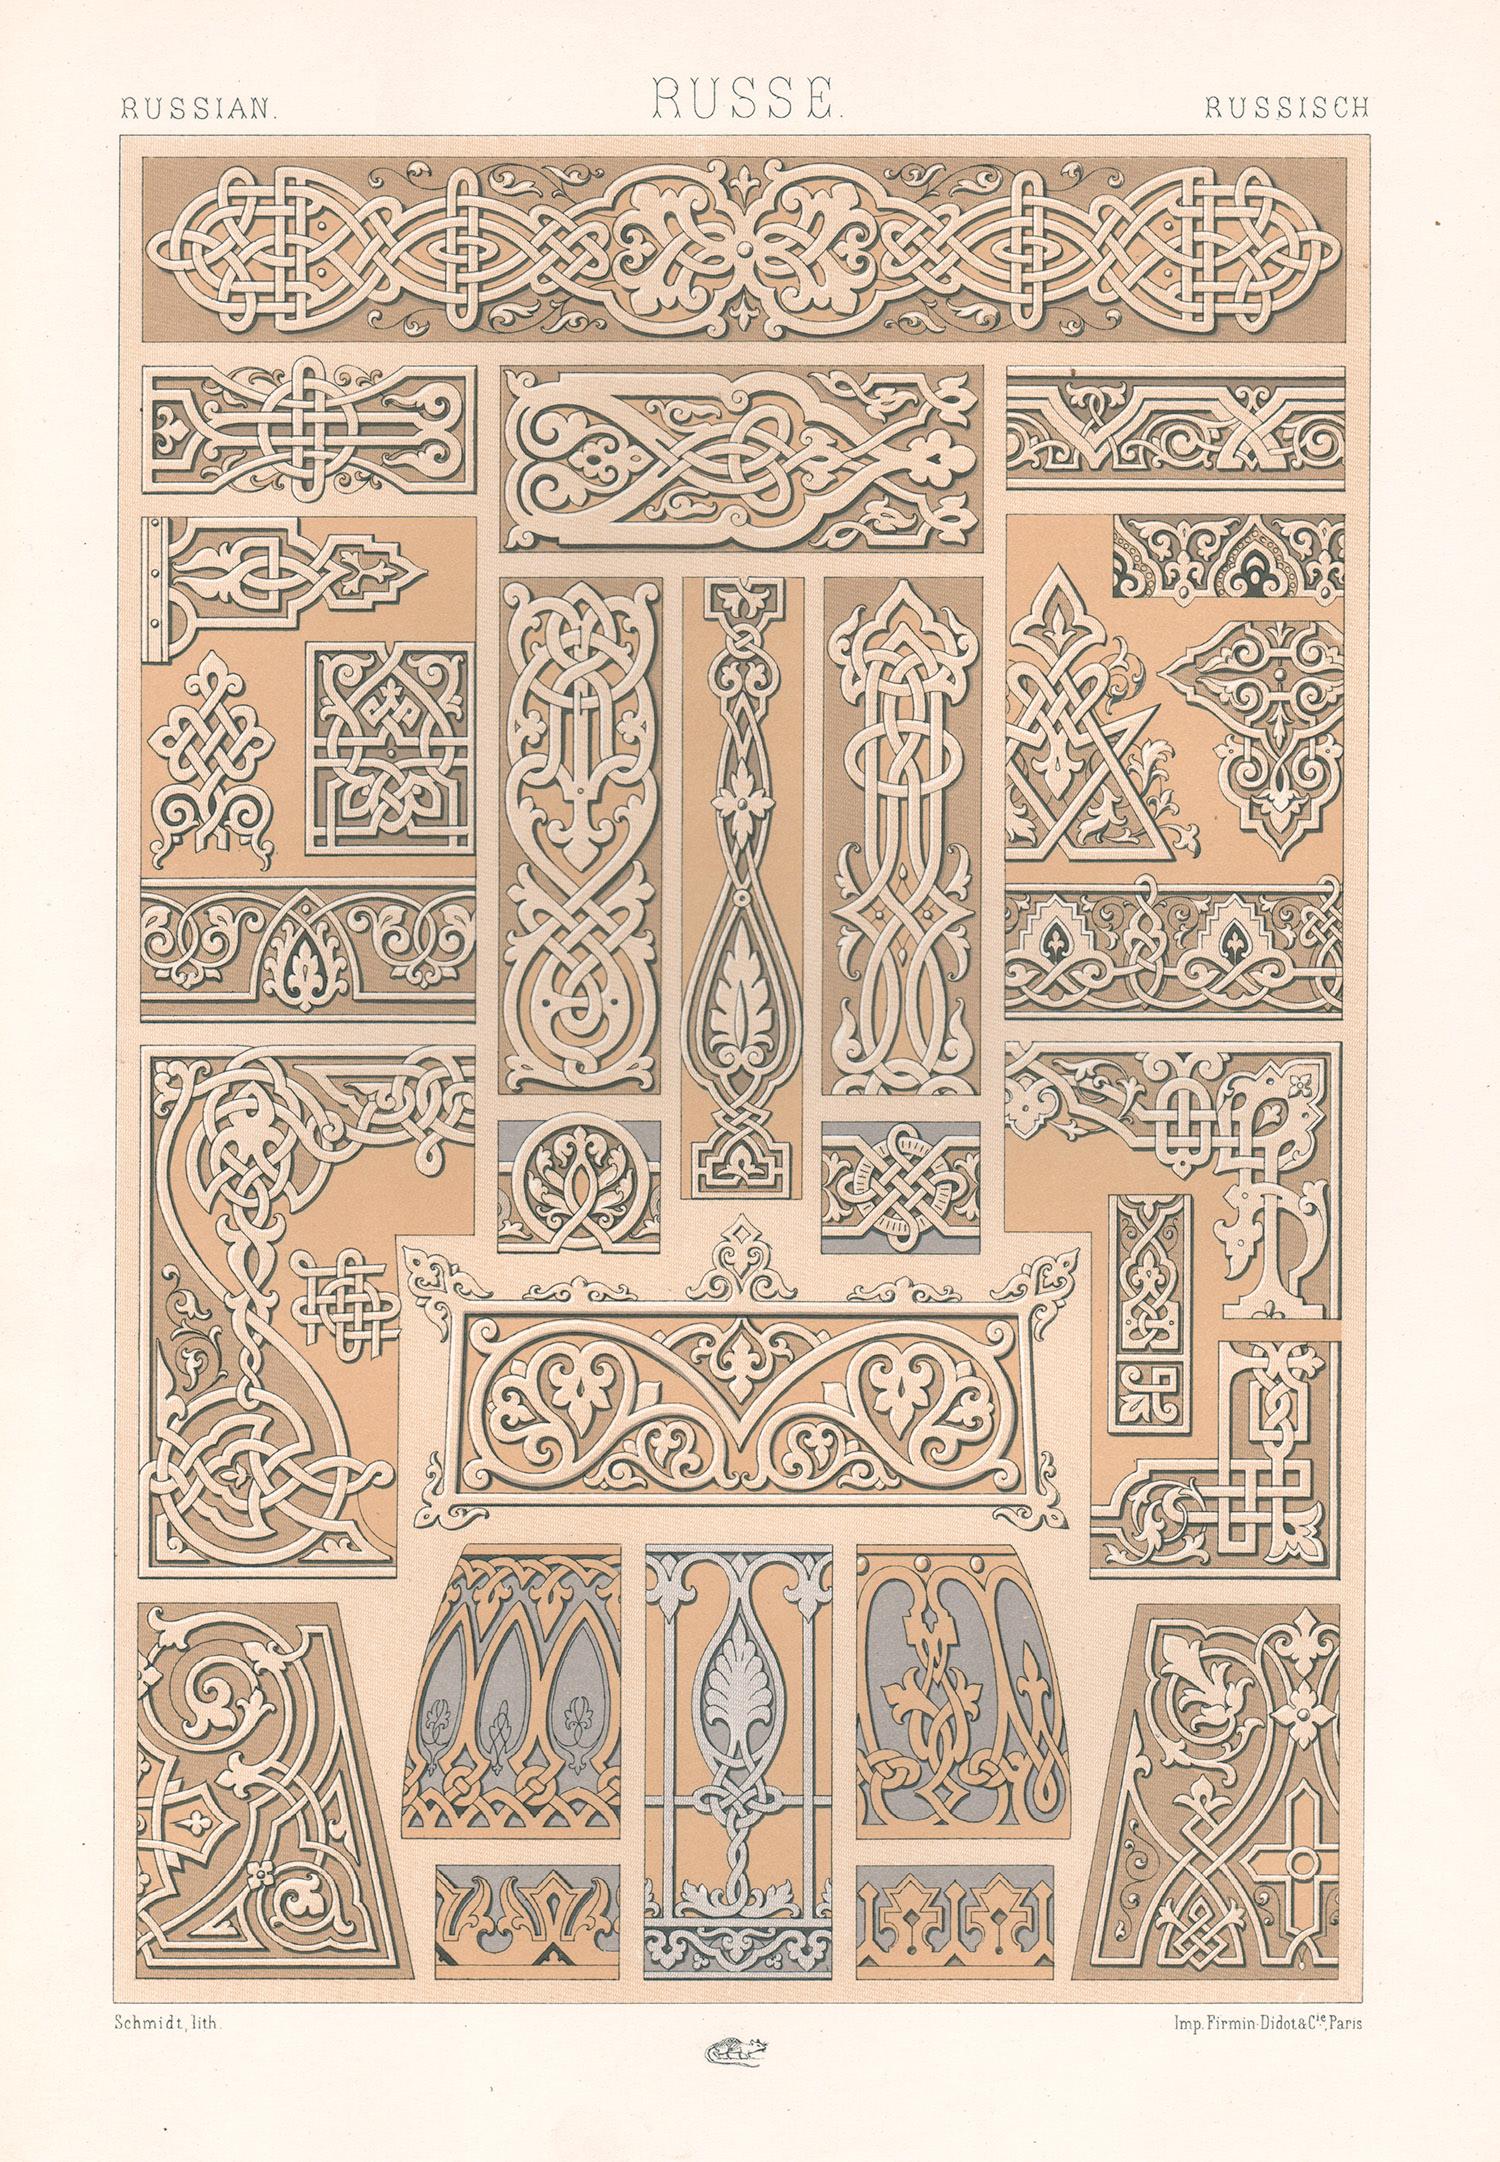 Albert-Charles-Auguste Racinet Interior Print - Russian, French antique 19th century Racinet art design lithograph print